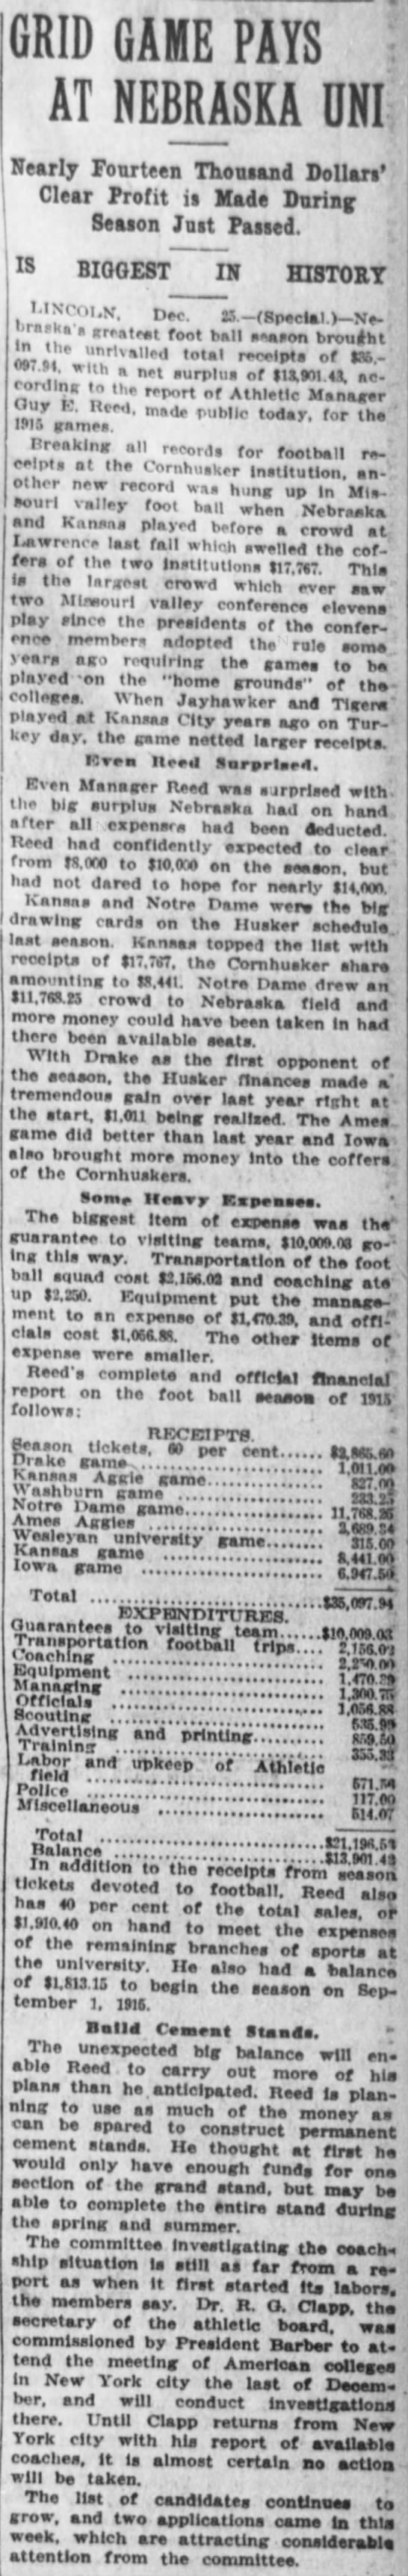 1915 Nebraska football record-high profit - 